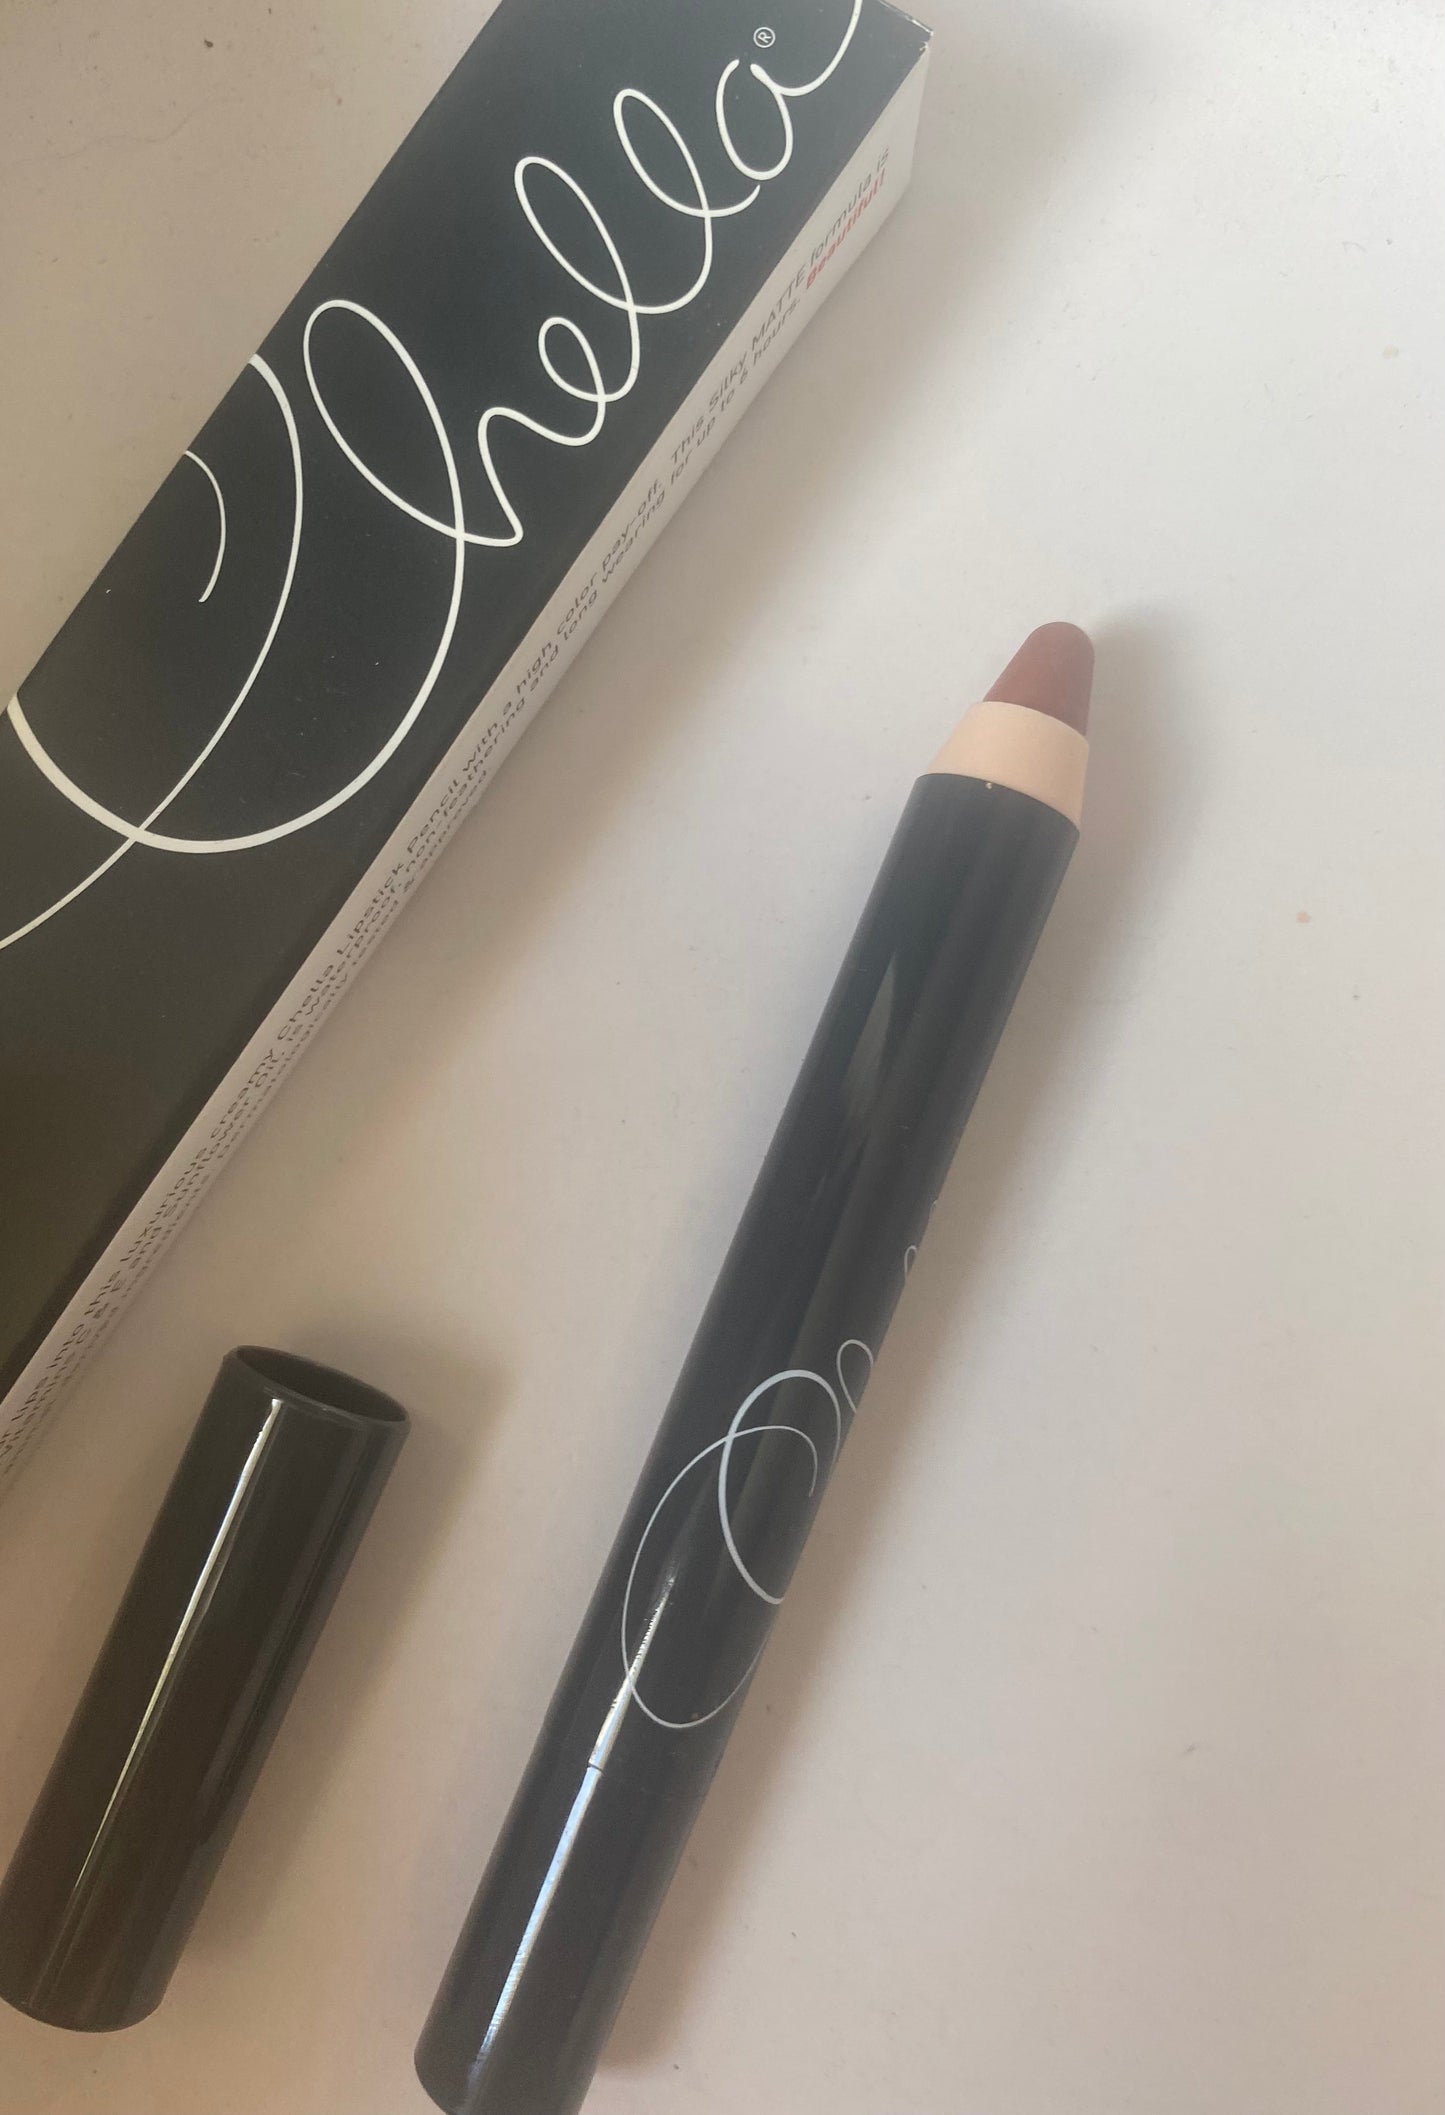 JUMBO Lipstick Pencil - Matte - MAUVE Aambers Goodies xx 